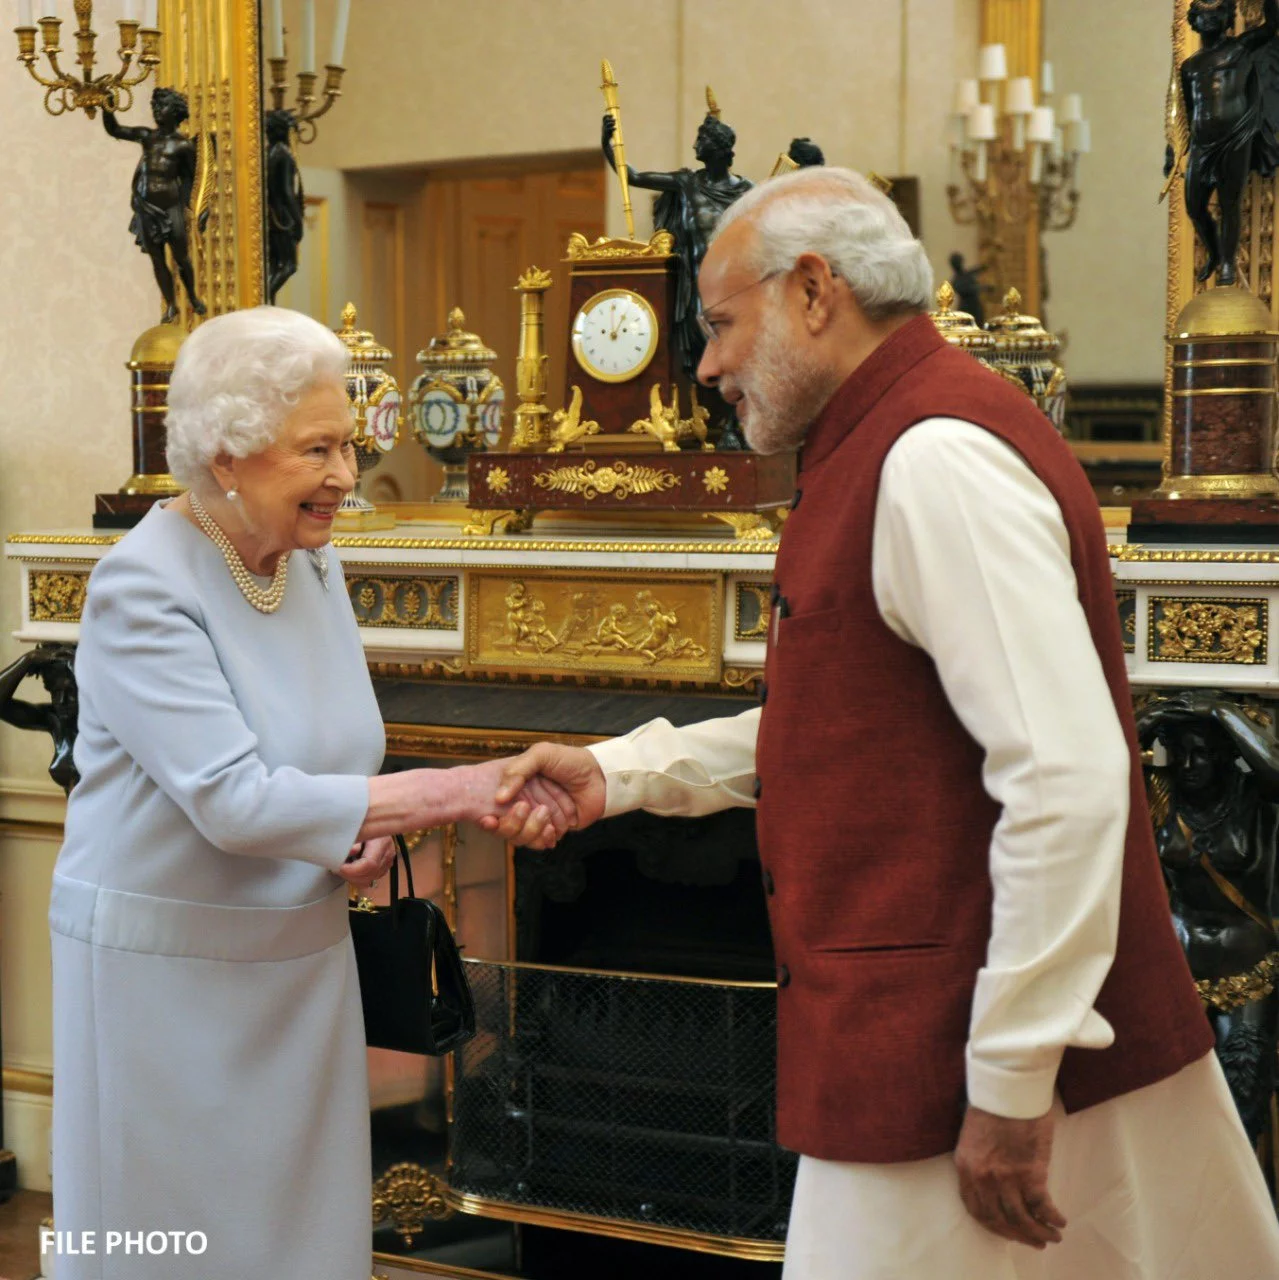 PM Modi condoles demise of World’s oldest monarch Queen Elizabeth II